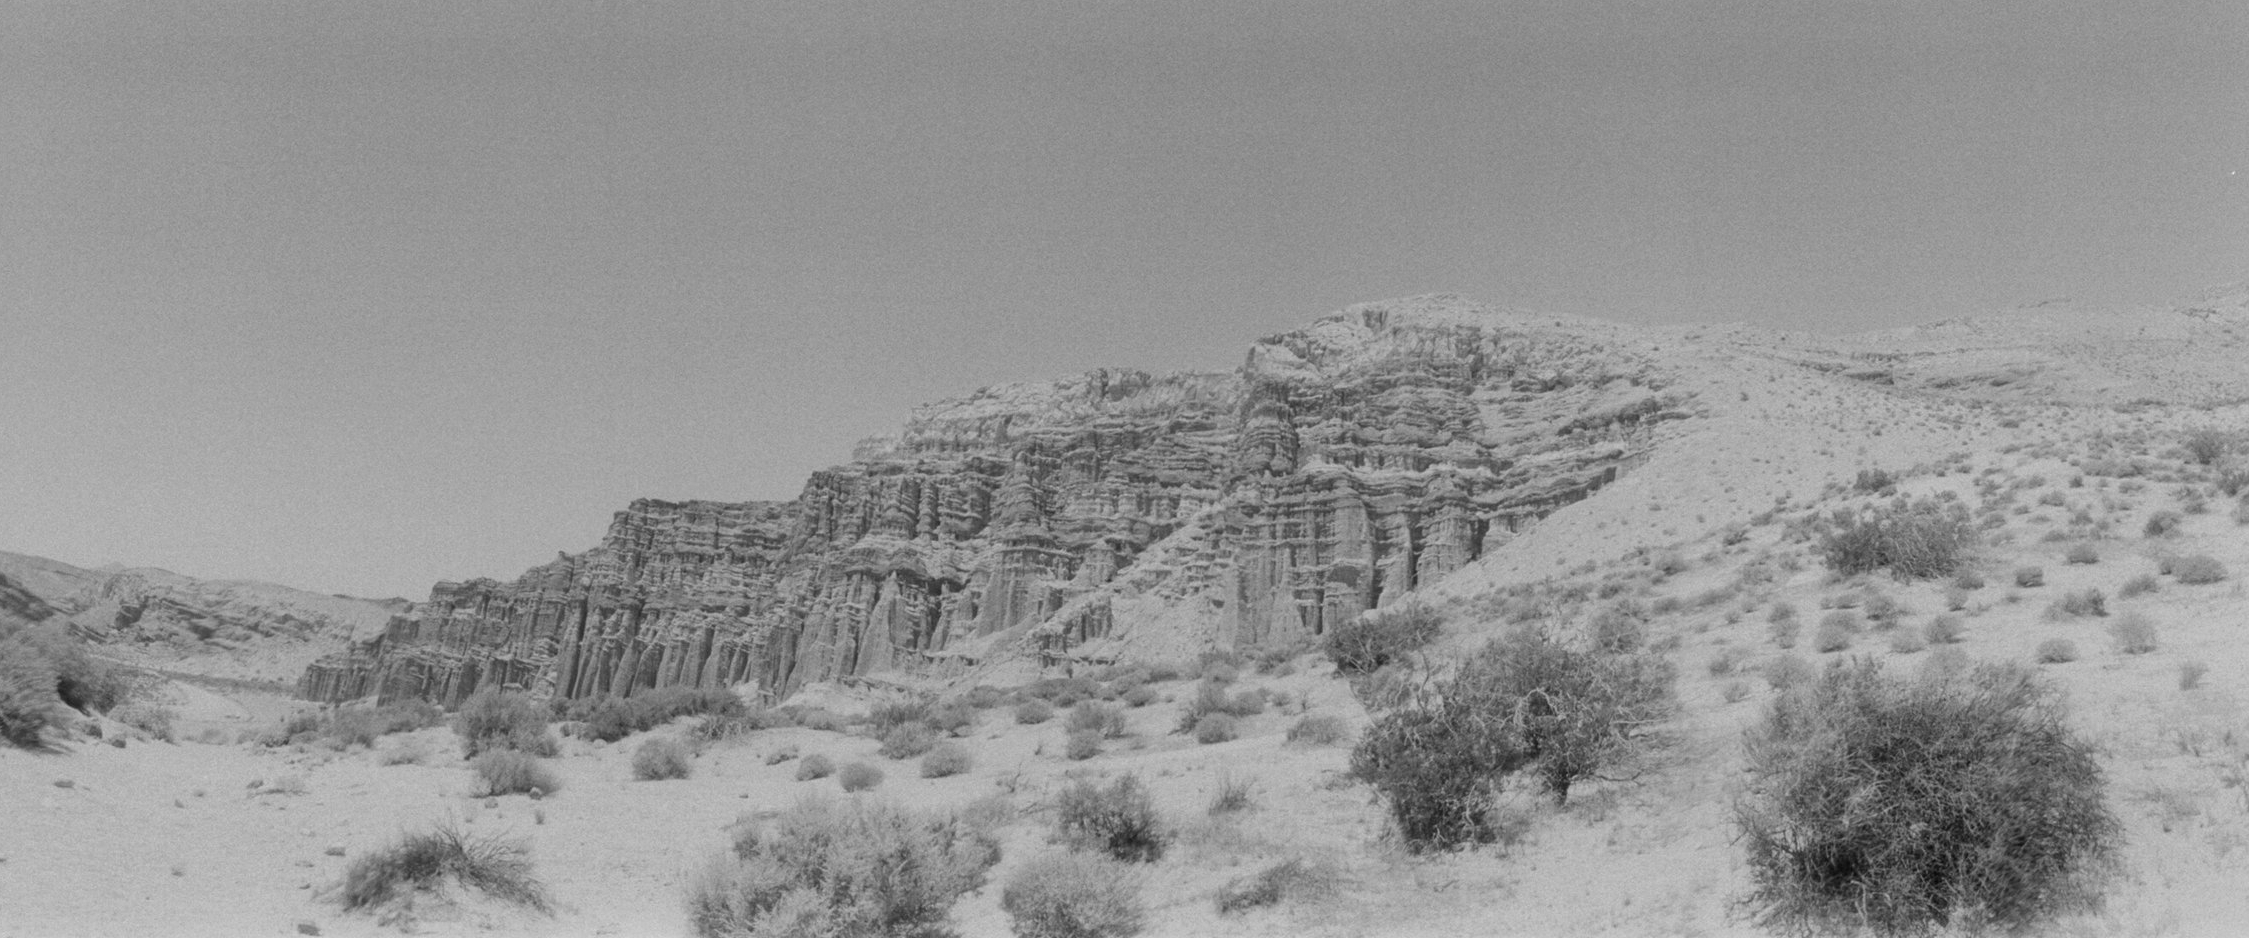 Red Rock Canyon No.1